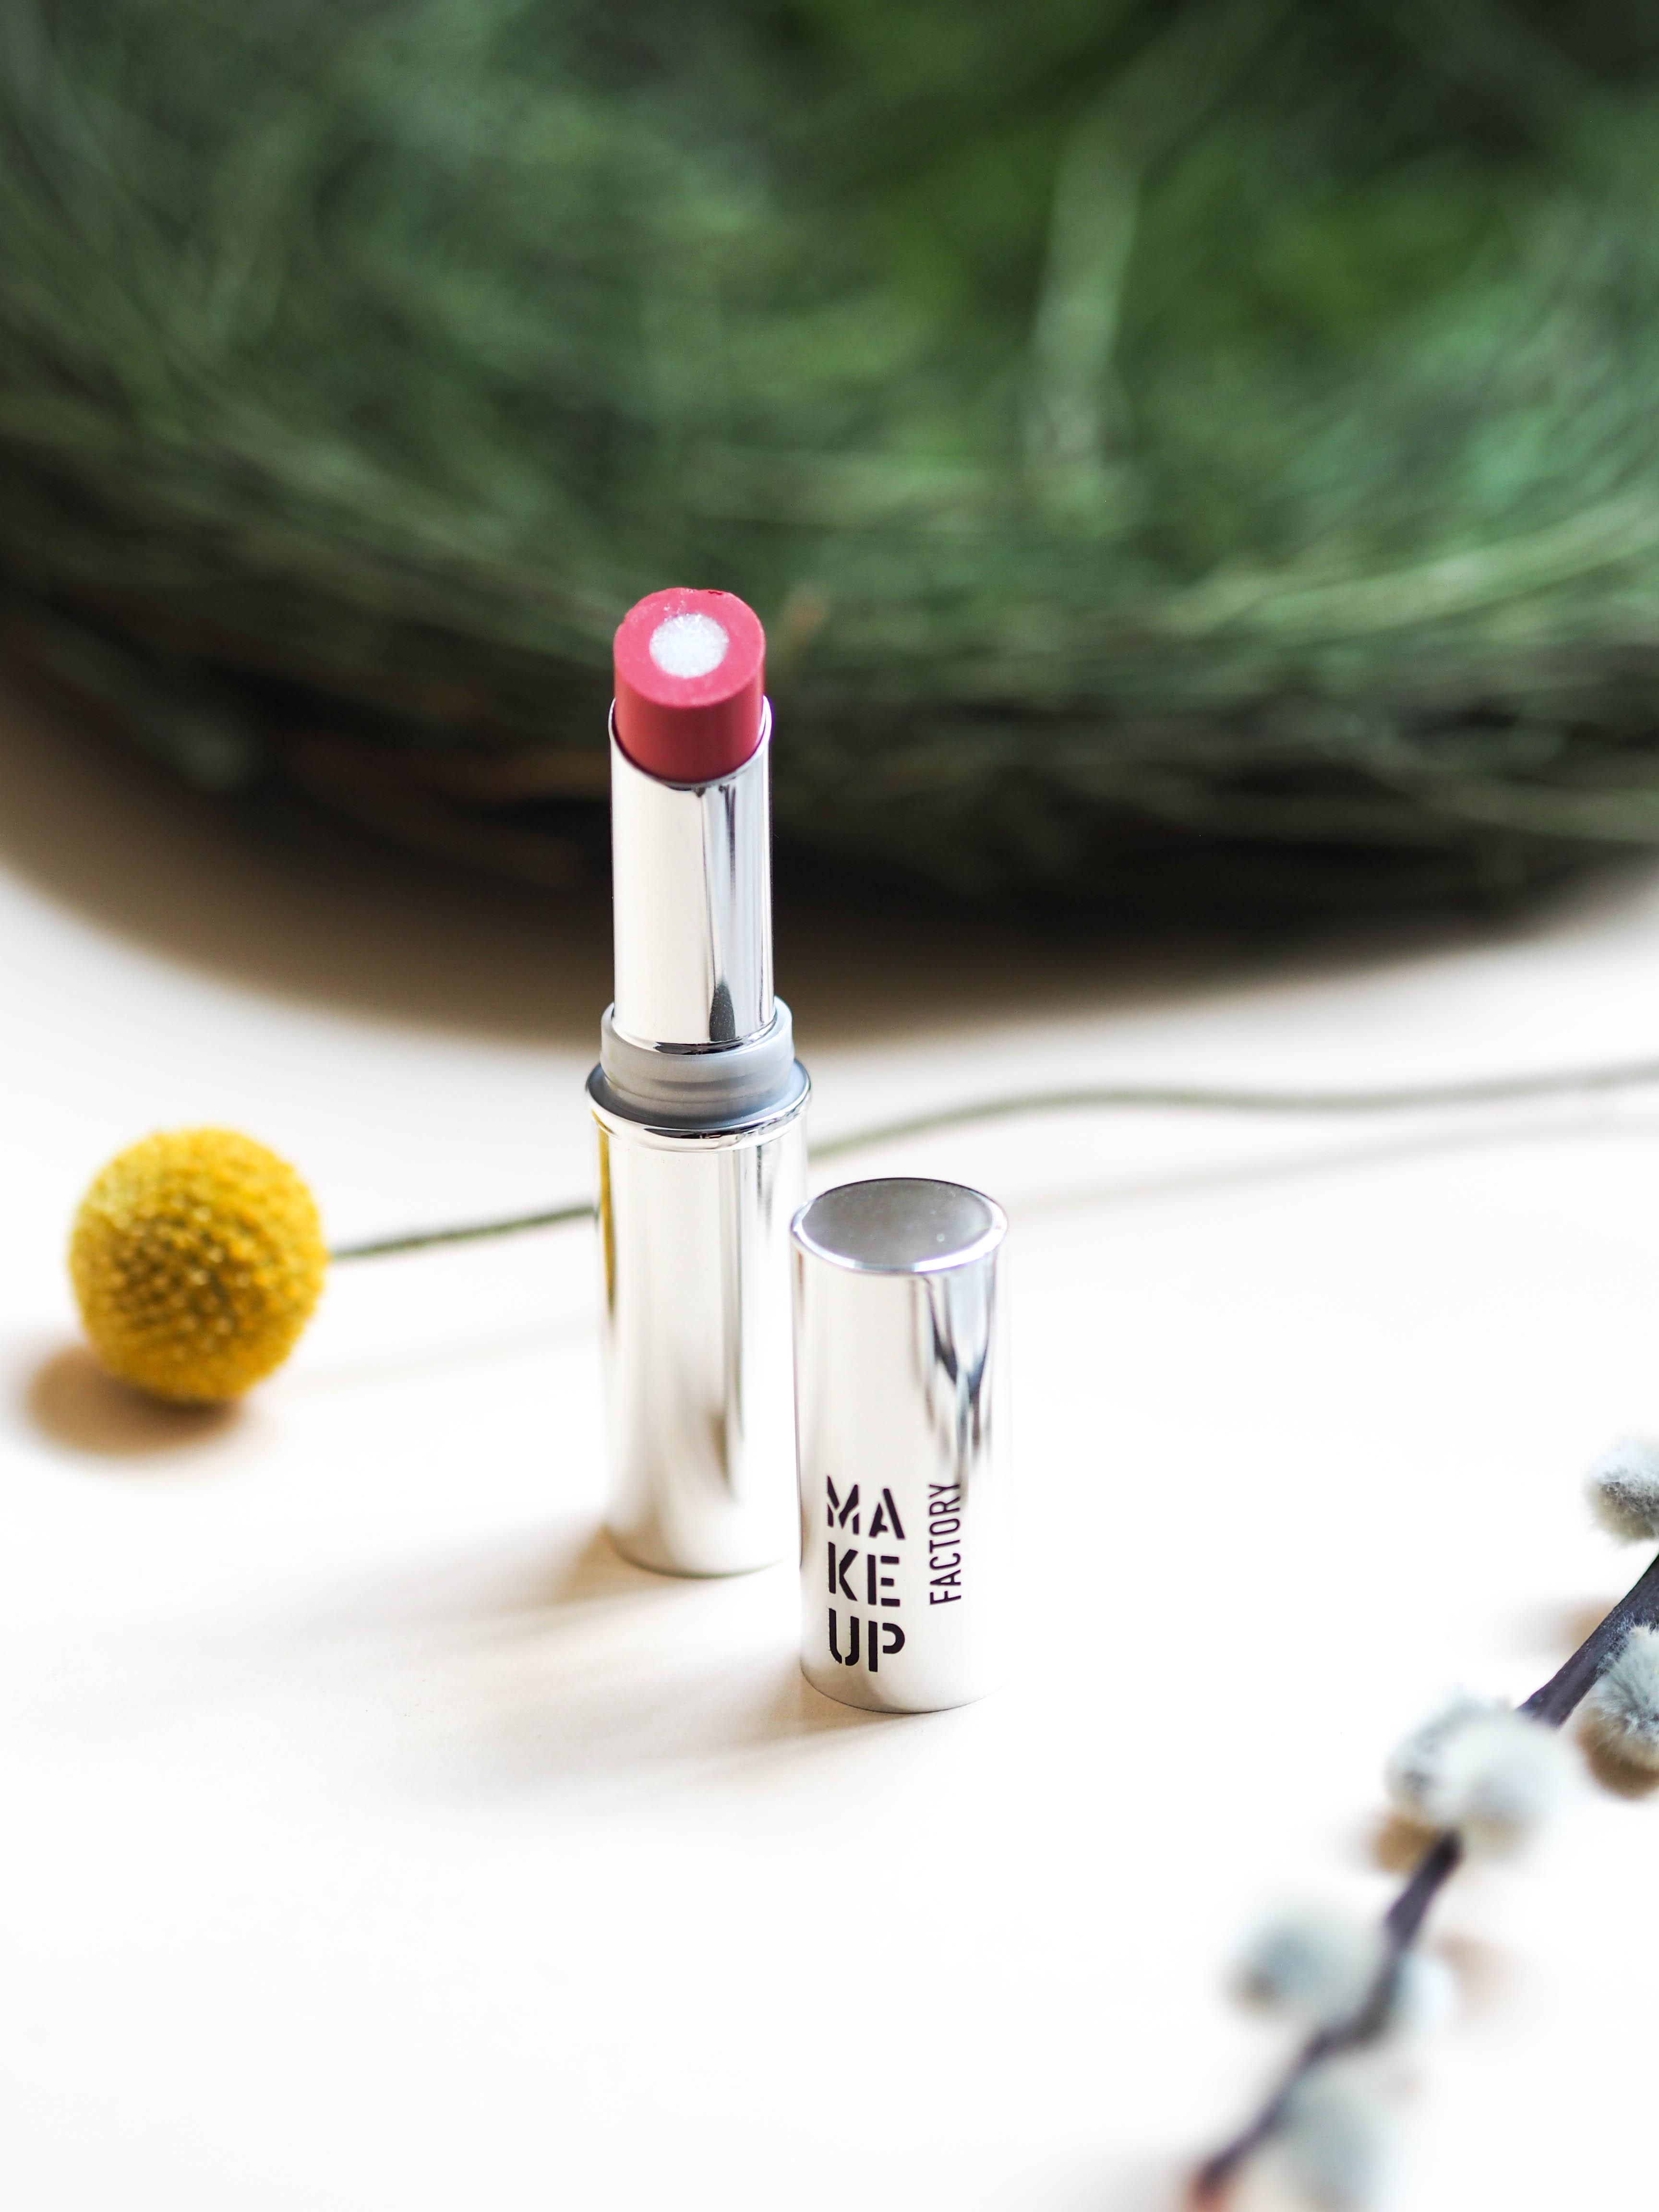 Farbe & Pflege vereint: Wir lieben den Ton "Natural Rose" von Make Up Factory #beautylieblinge #makeupfactory